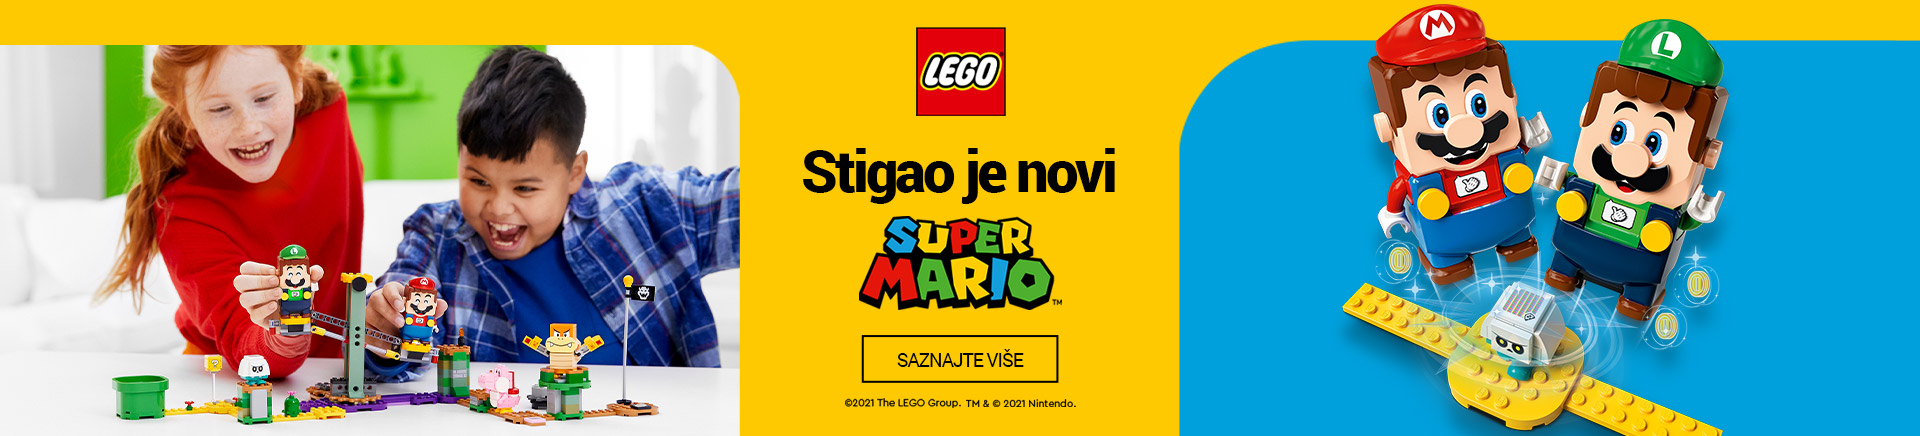 Lego Super Mario novi